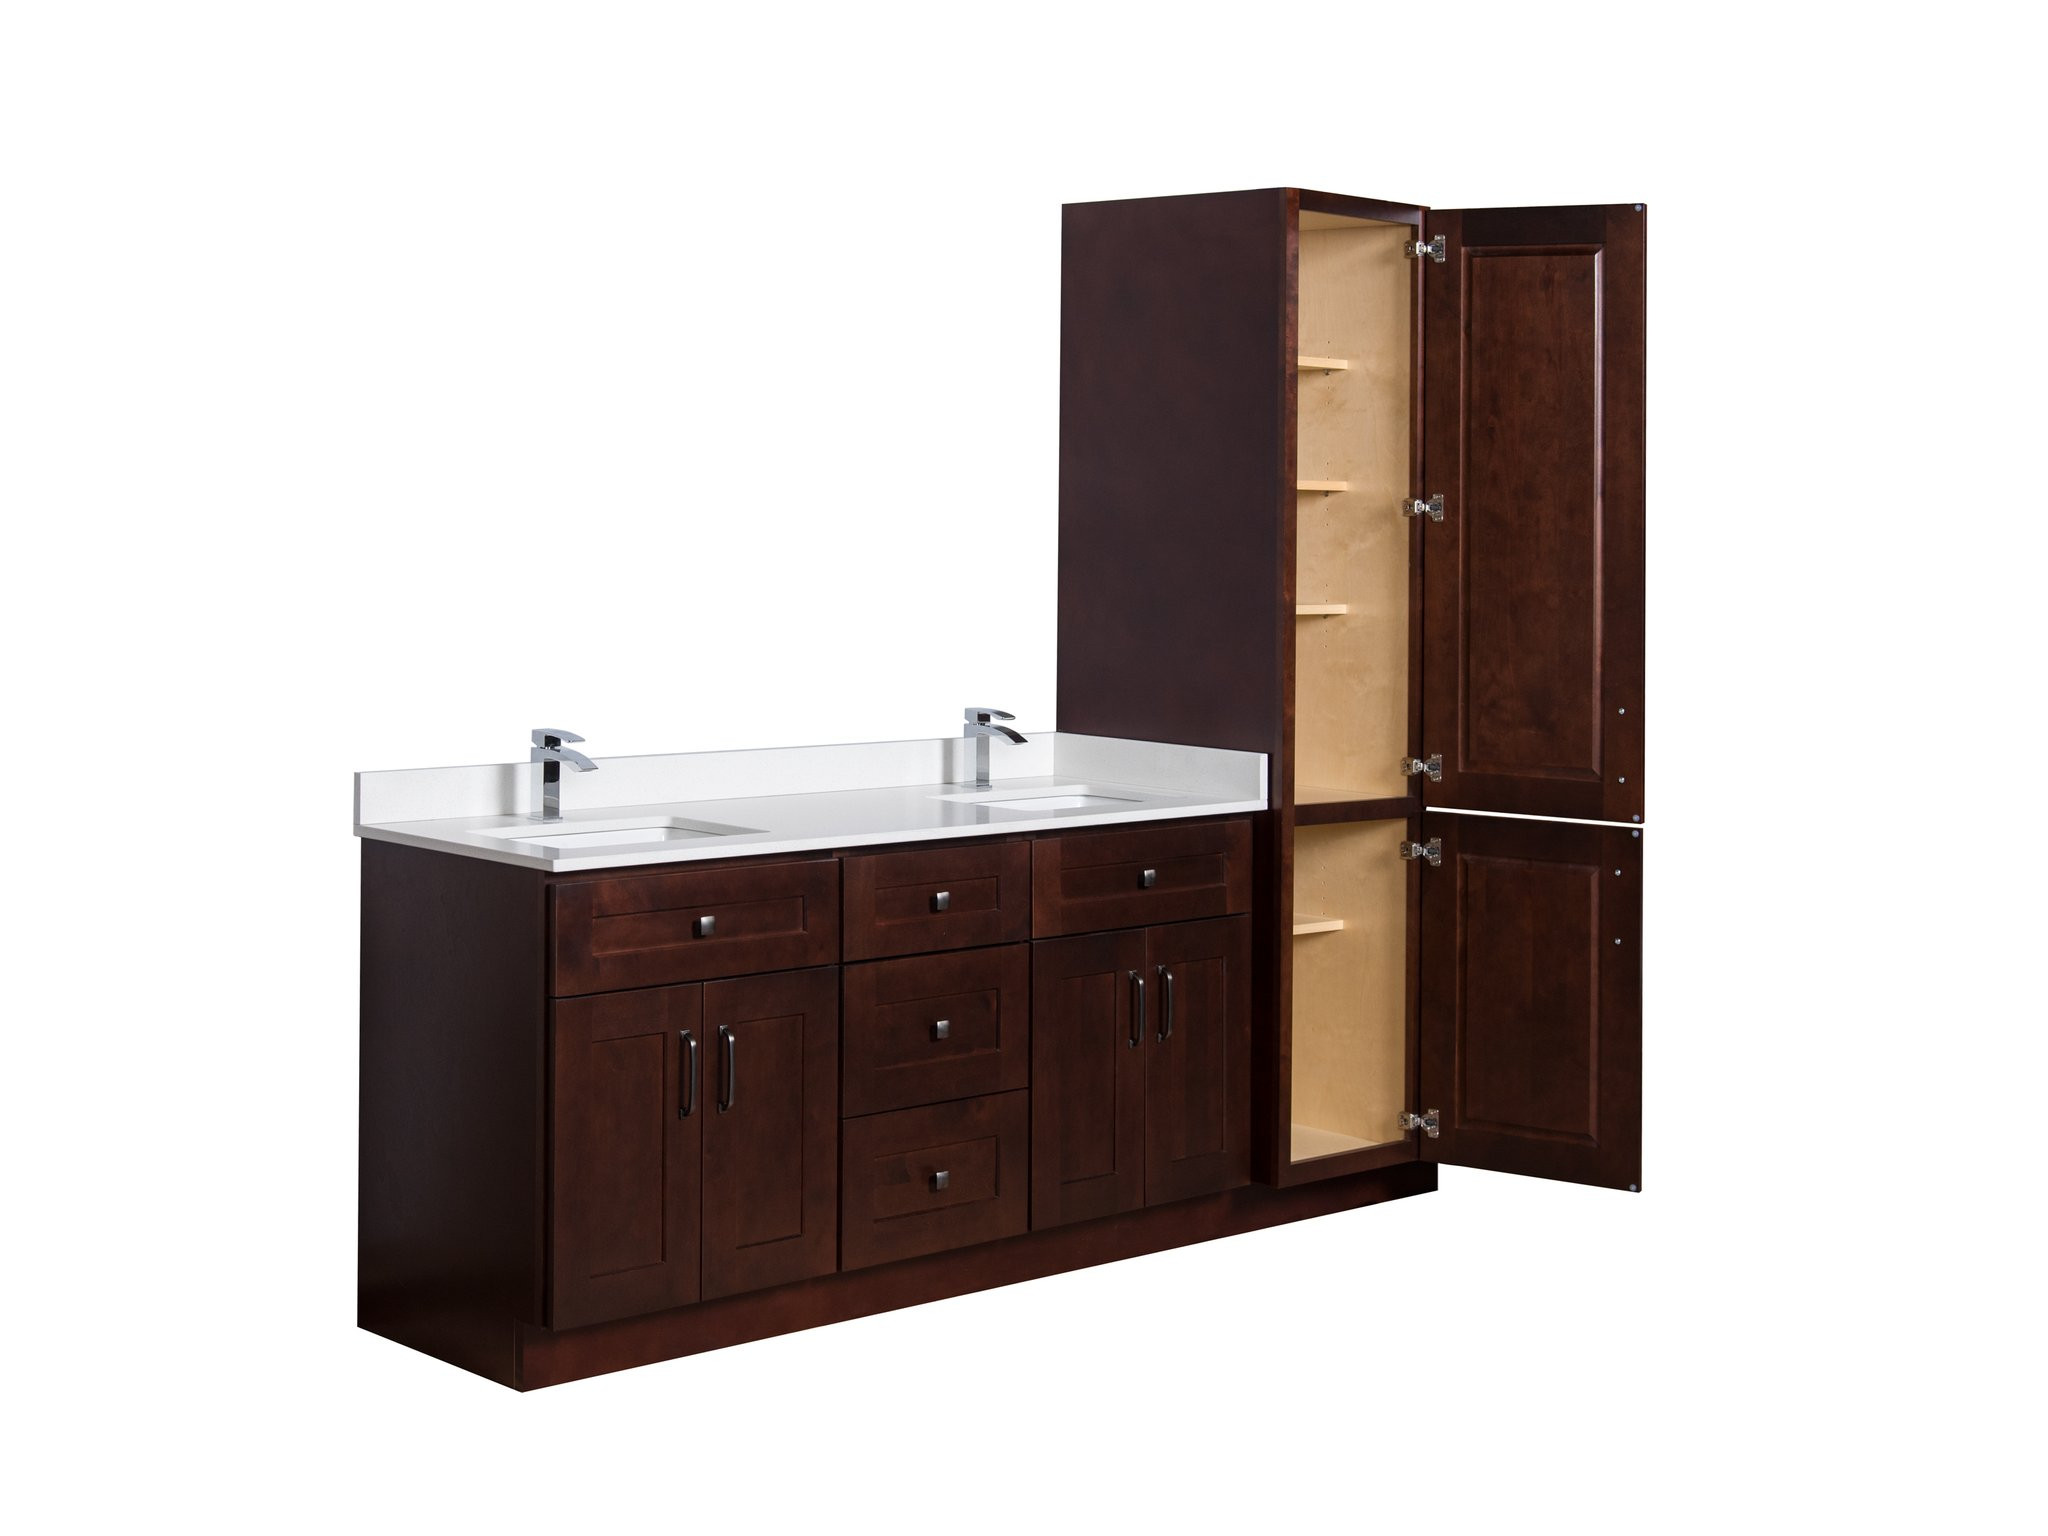 Vanity Cabinets For Bathroom
 Broadway Vanities Wood Bathroom Cabinets Showroom or